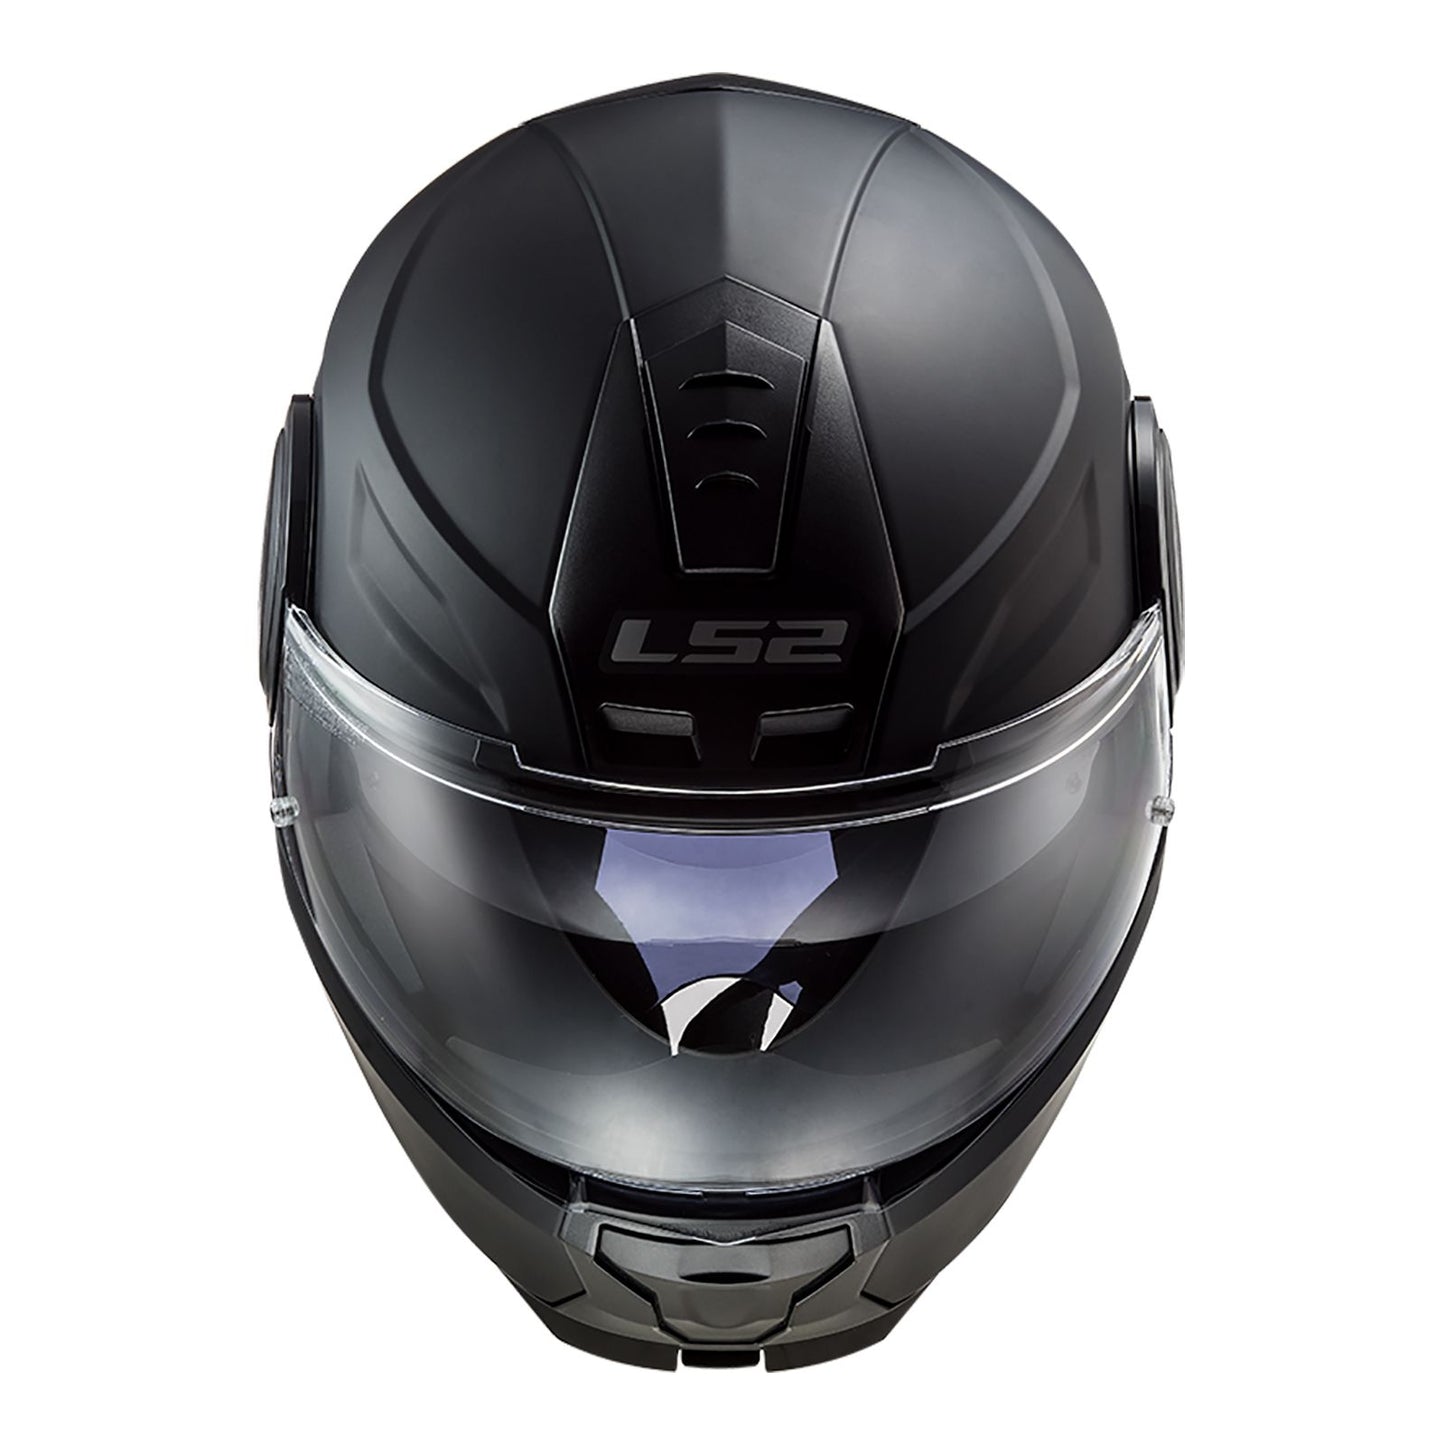 LS2 FF902 Scope Matte Black Flip Front Road Helmet